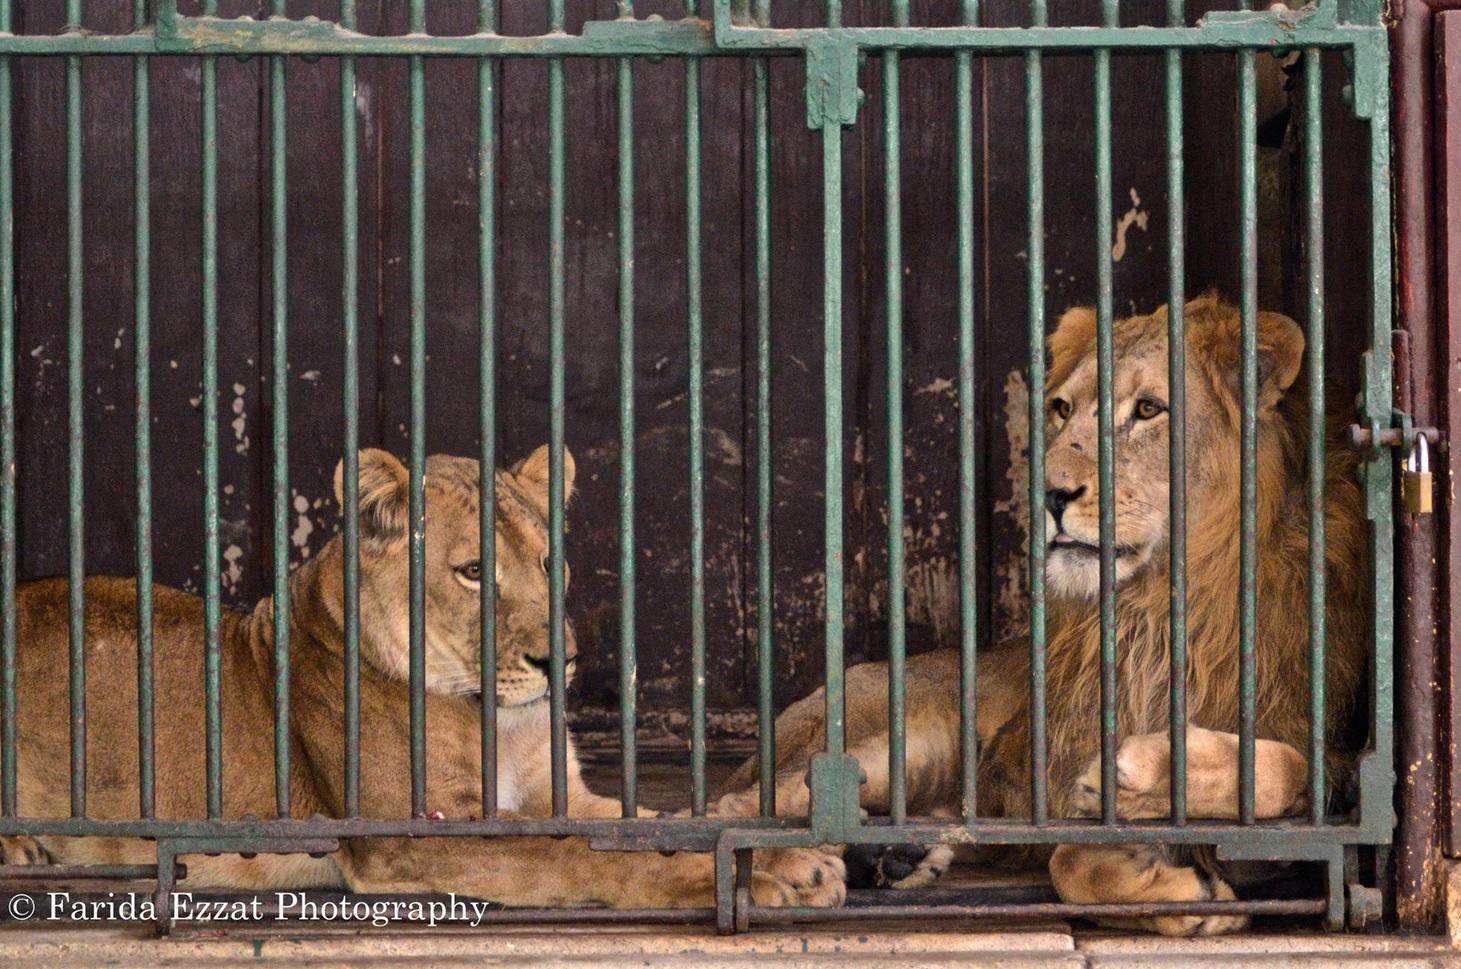 Caged animals